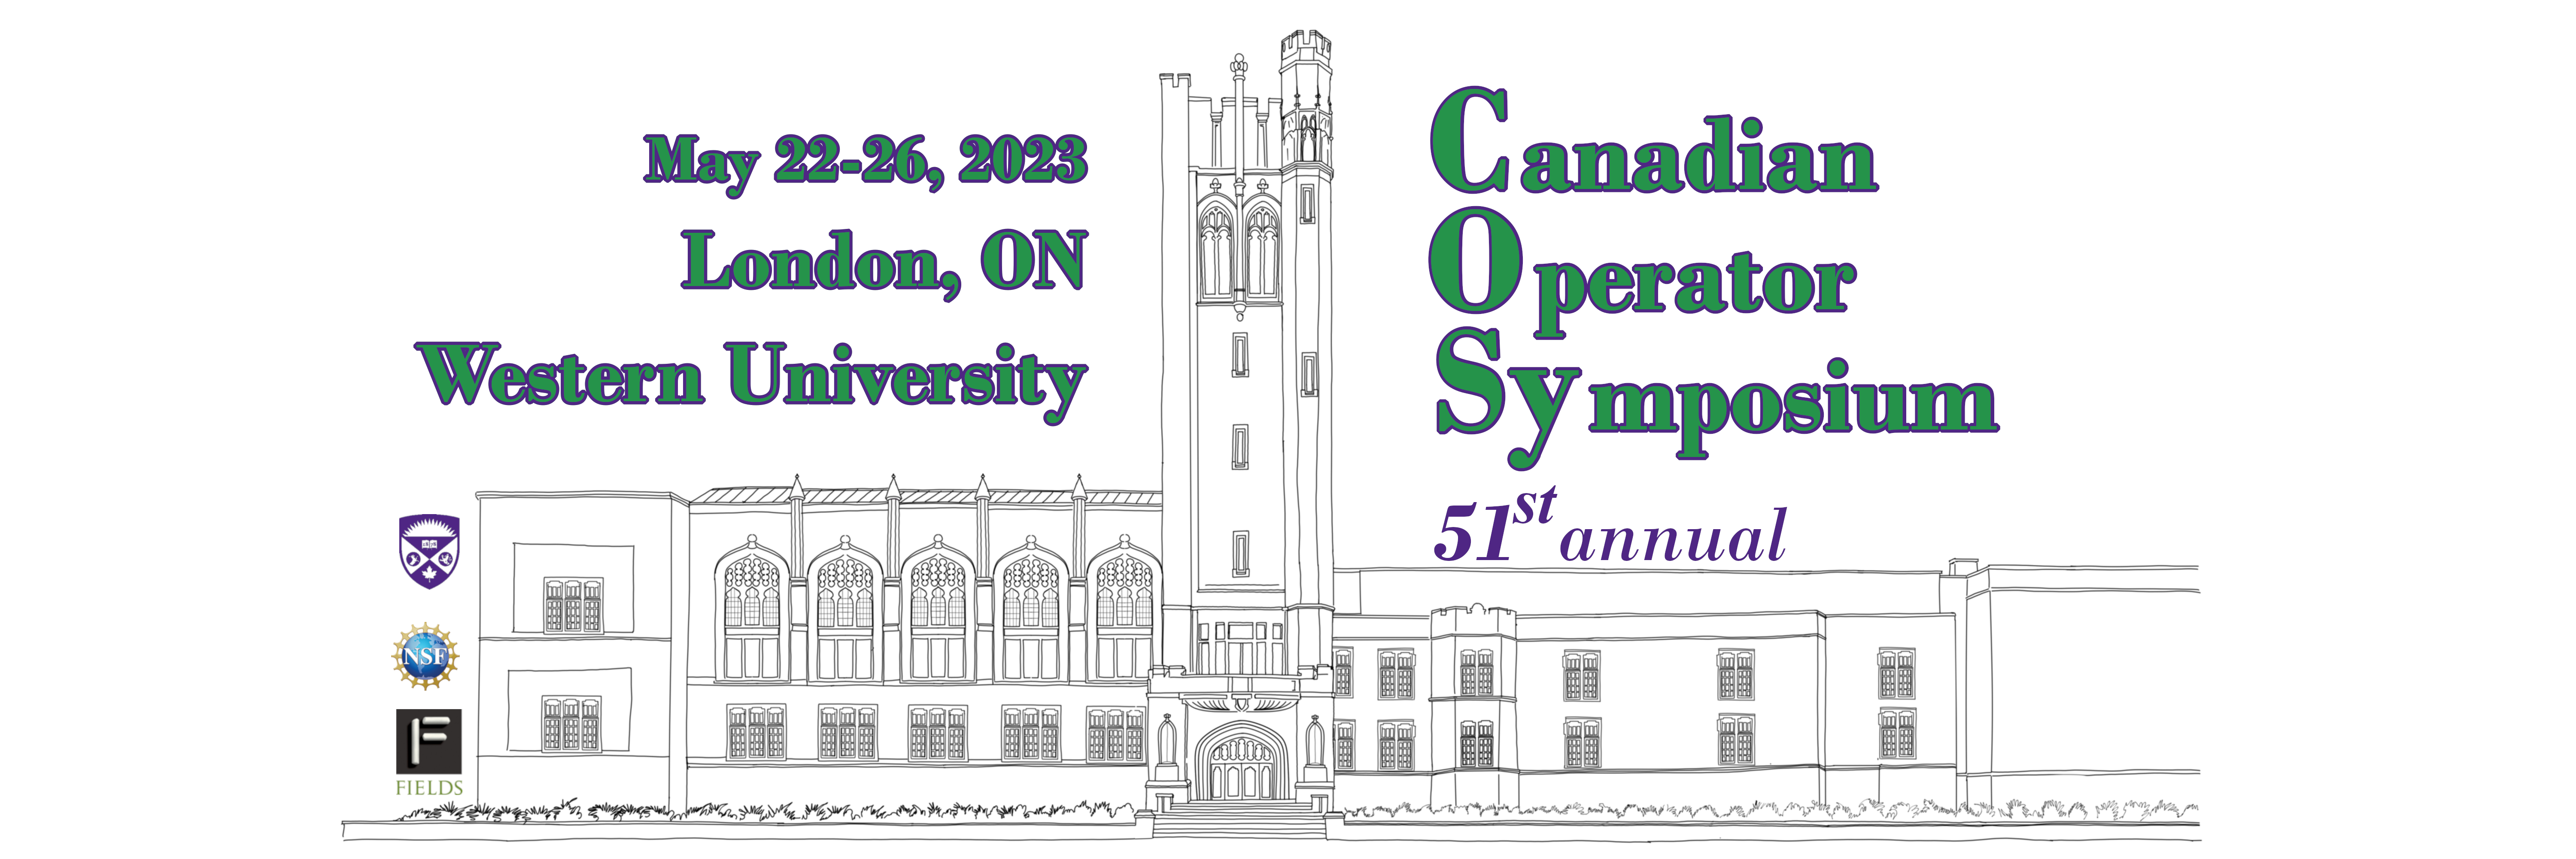 51 annual Canadian Operator Symposium London Ontario Western University